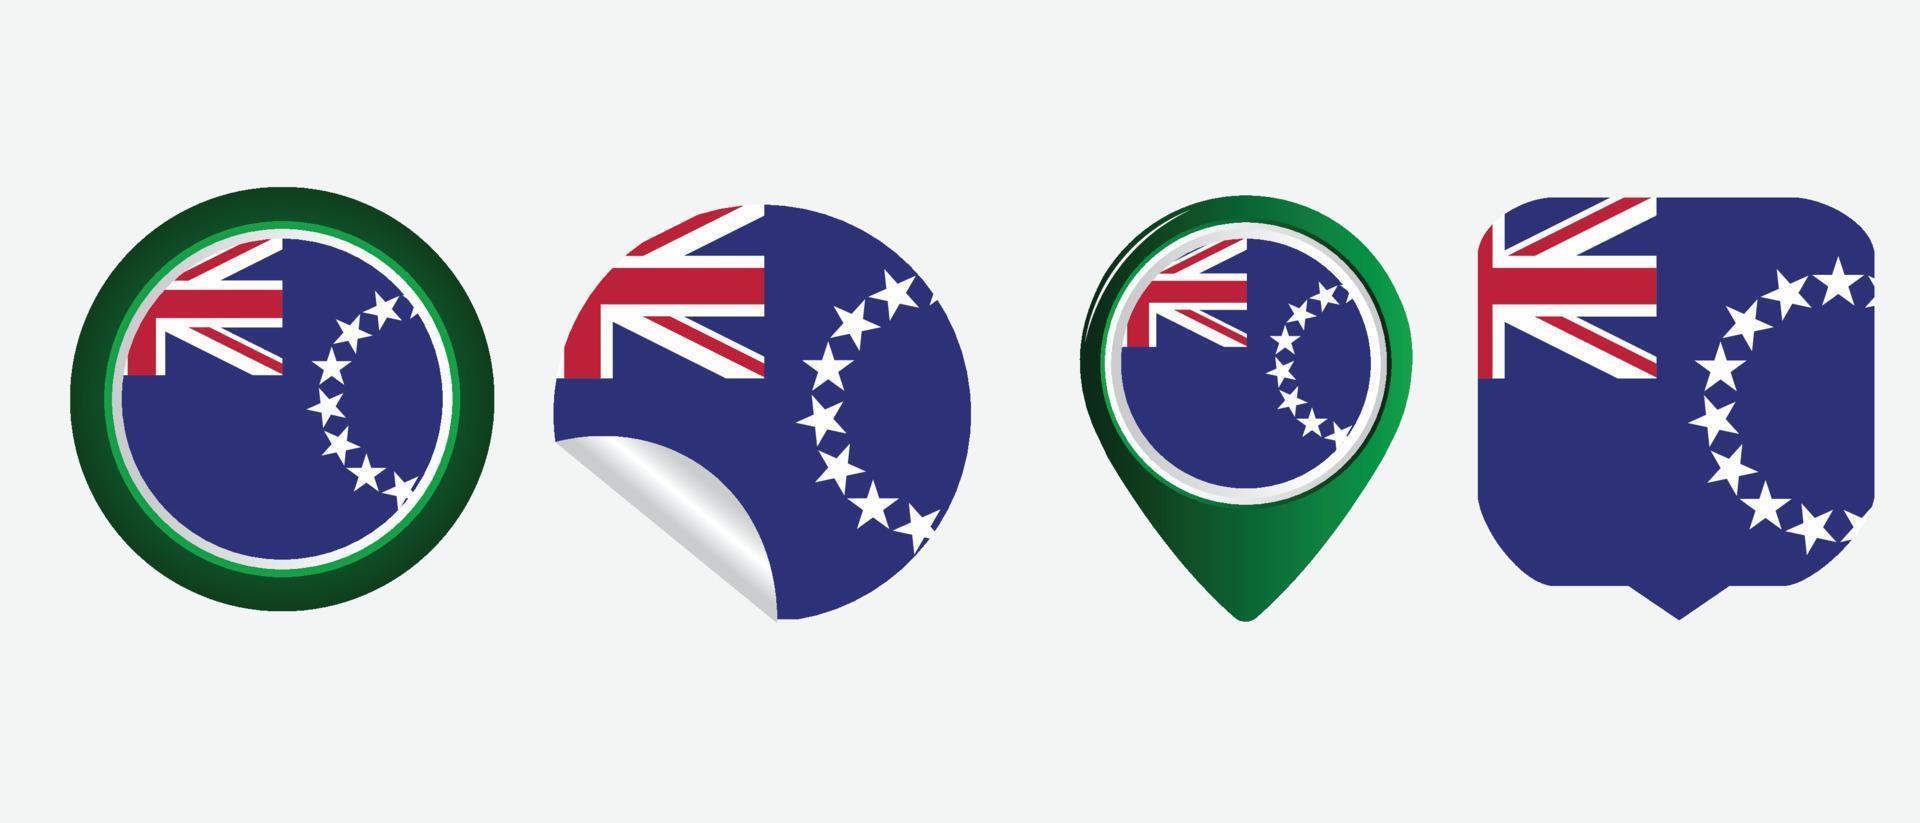 Cook Islands flag. flat icon symbol vector illustration